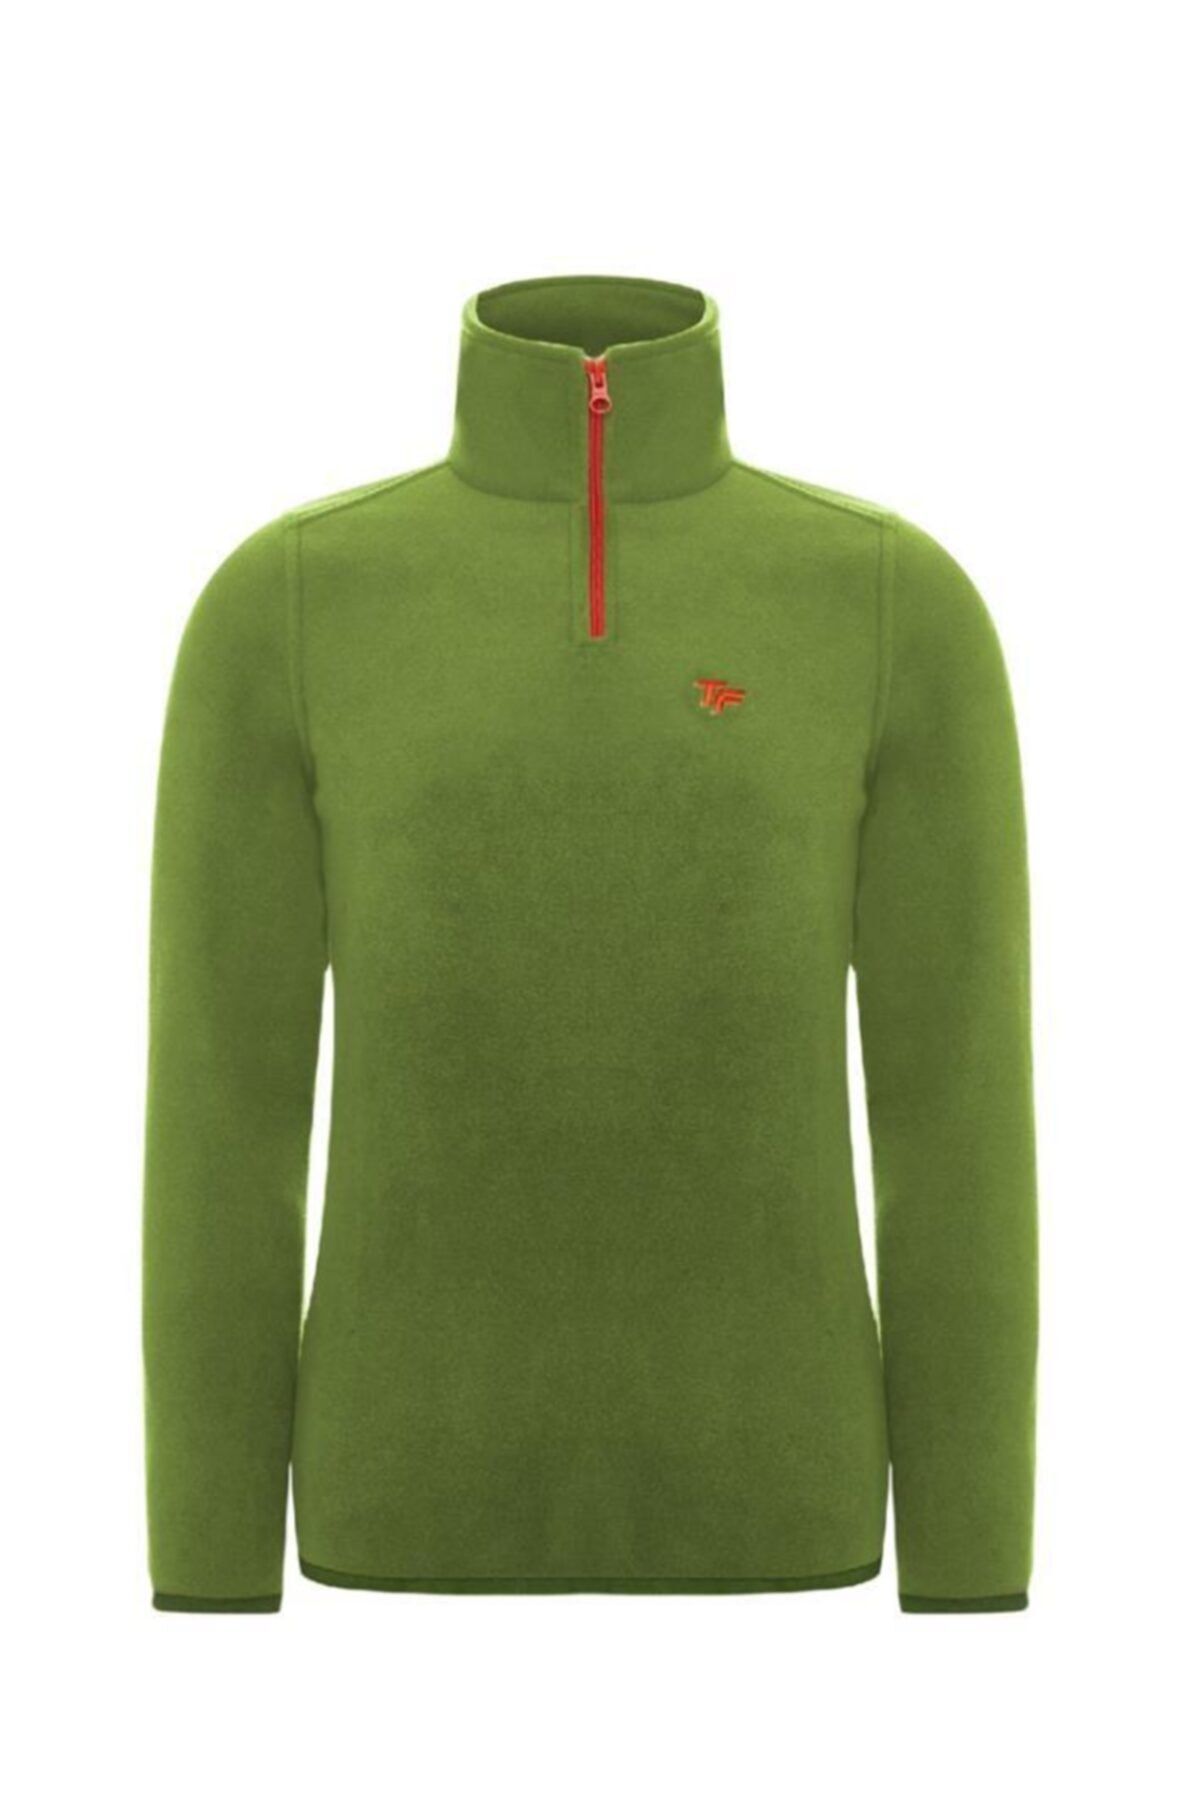 Thermoform Polarline Erkek 1/4 Fermuar Sweatshirt Yeşil (Hztp19020-ysl)